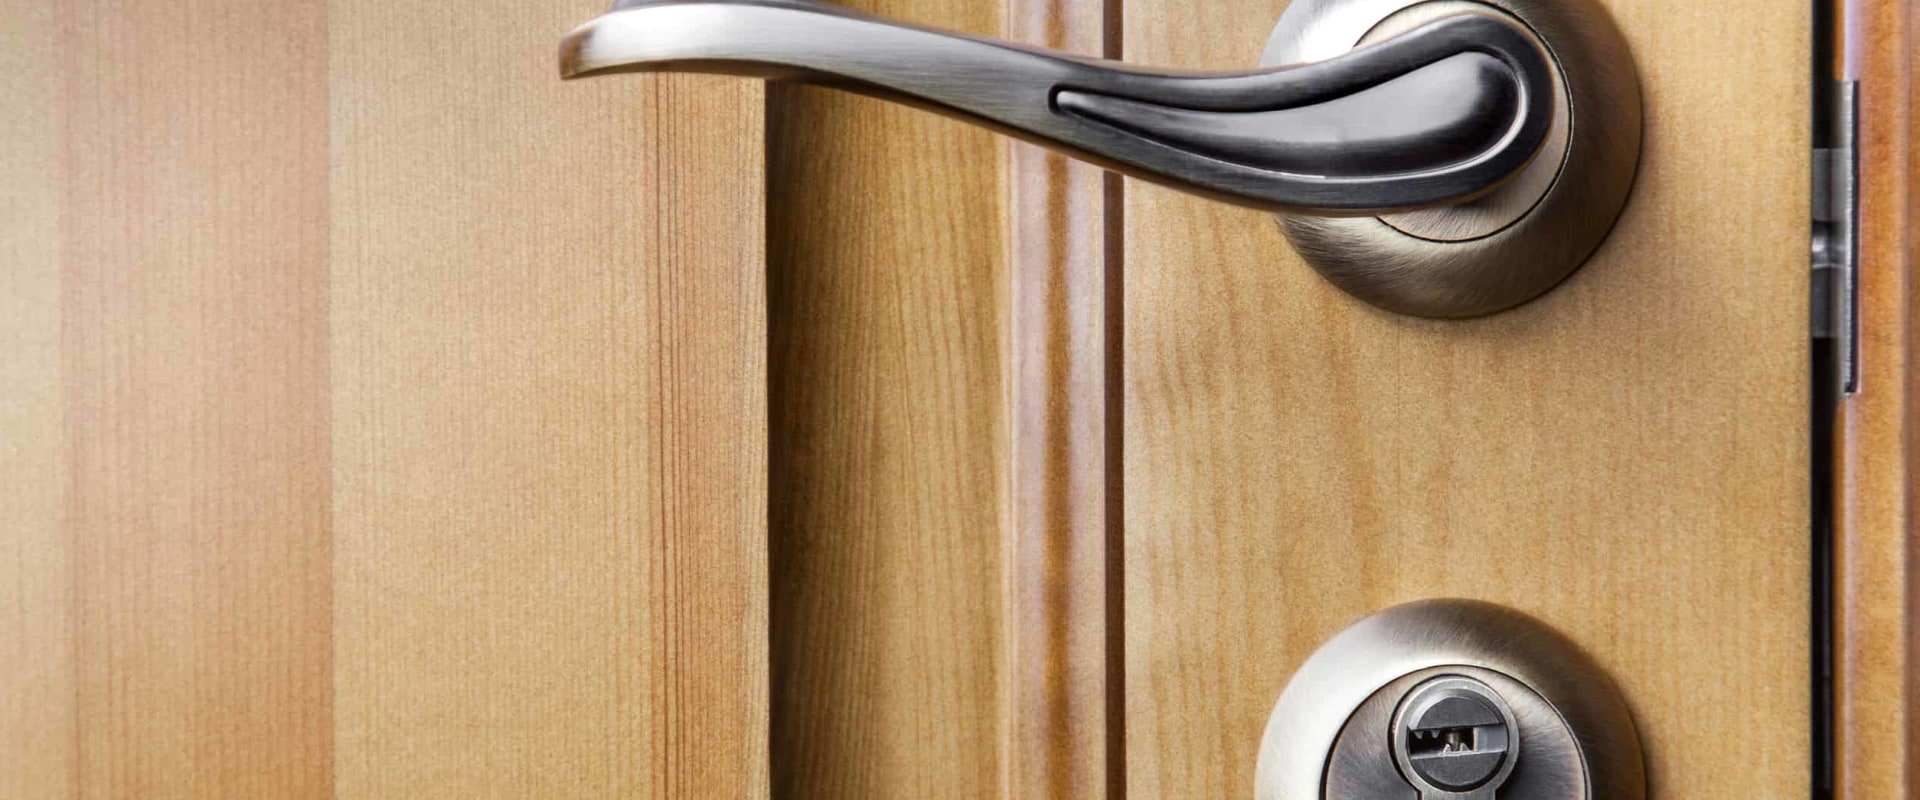 Best and Worst Door Locks - Consumer Reports